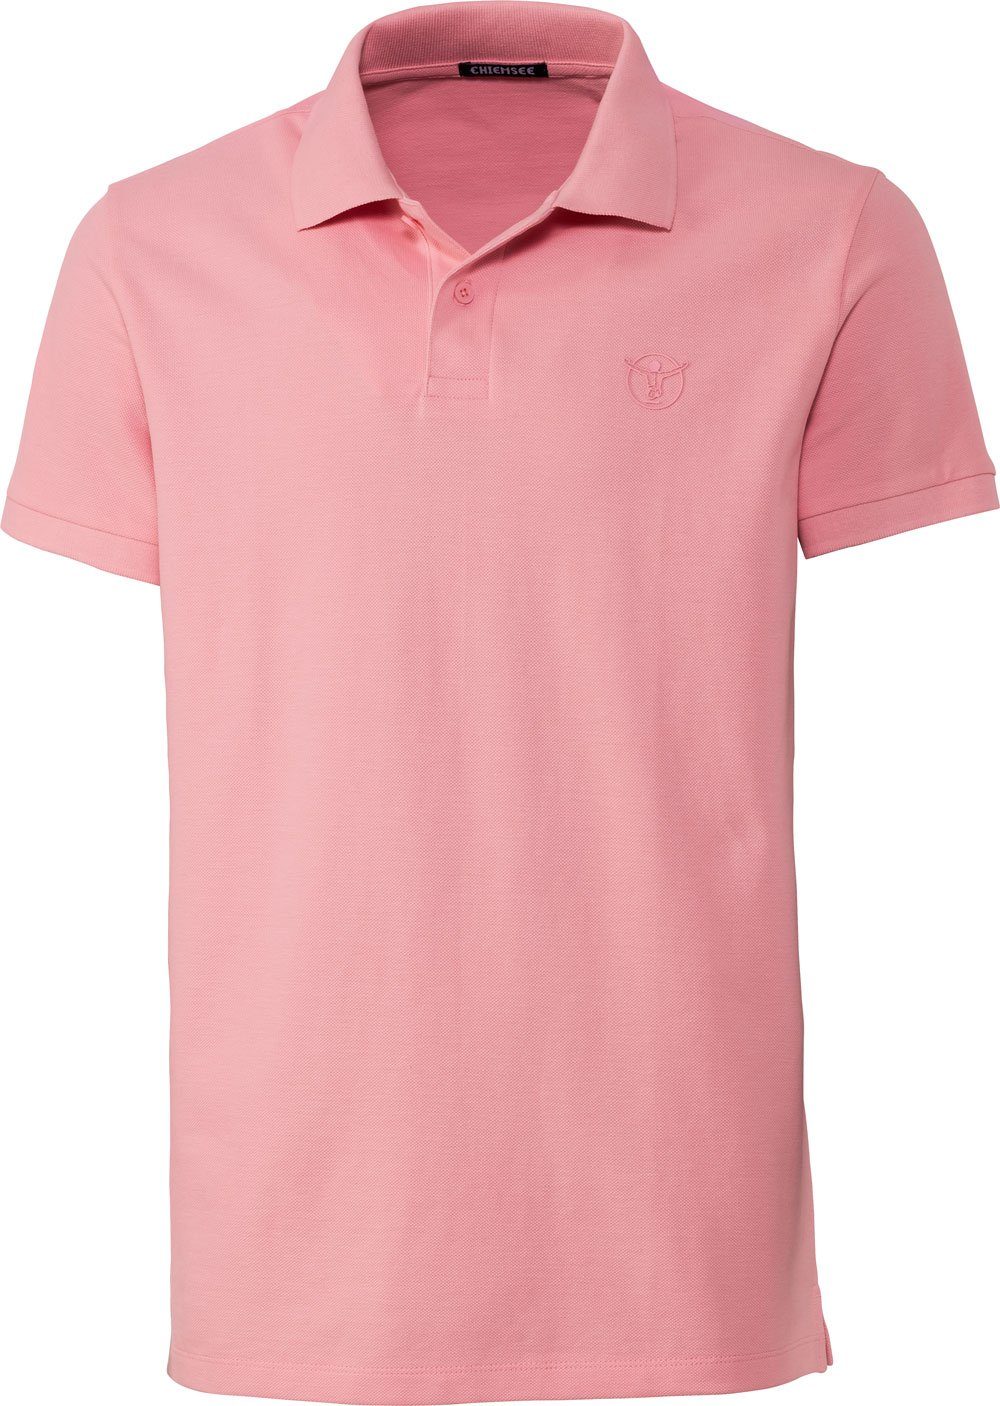 Polo-Shirt in rosa online kaufen » Pinke Poloshirts | OTTO